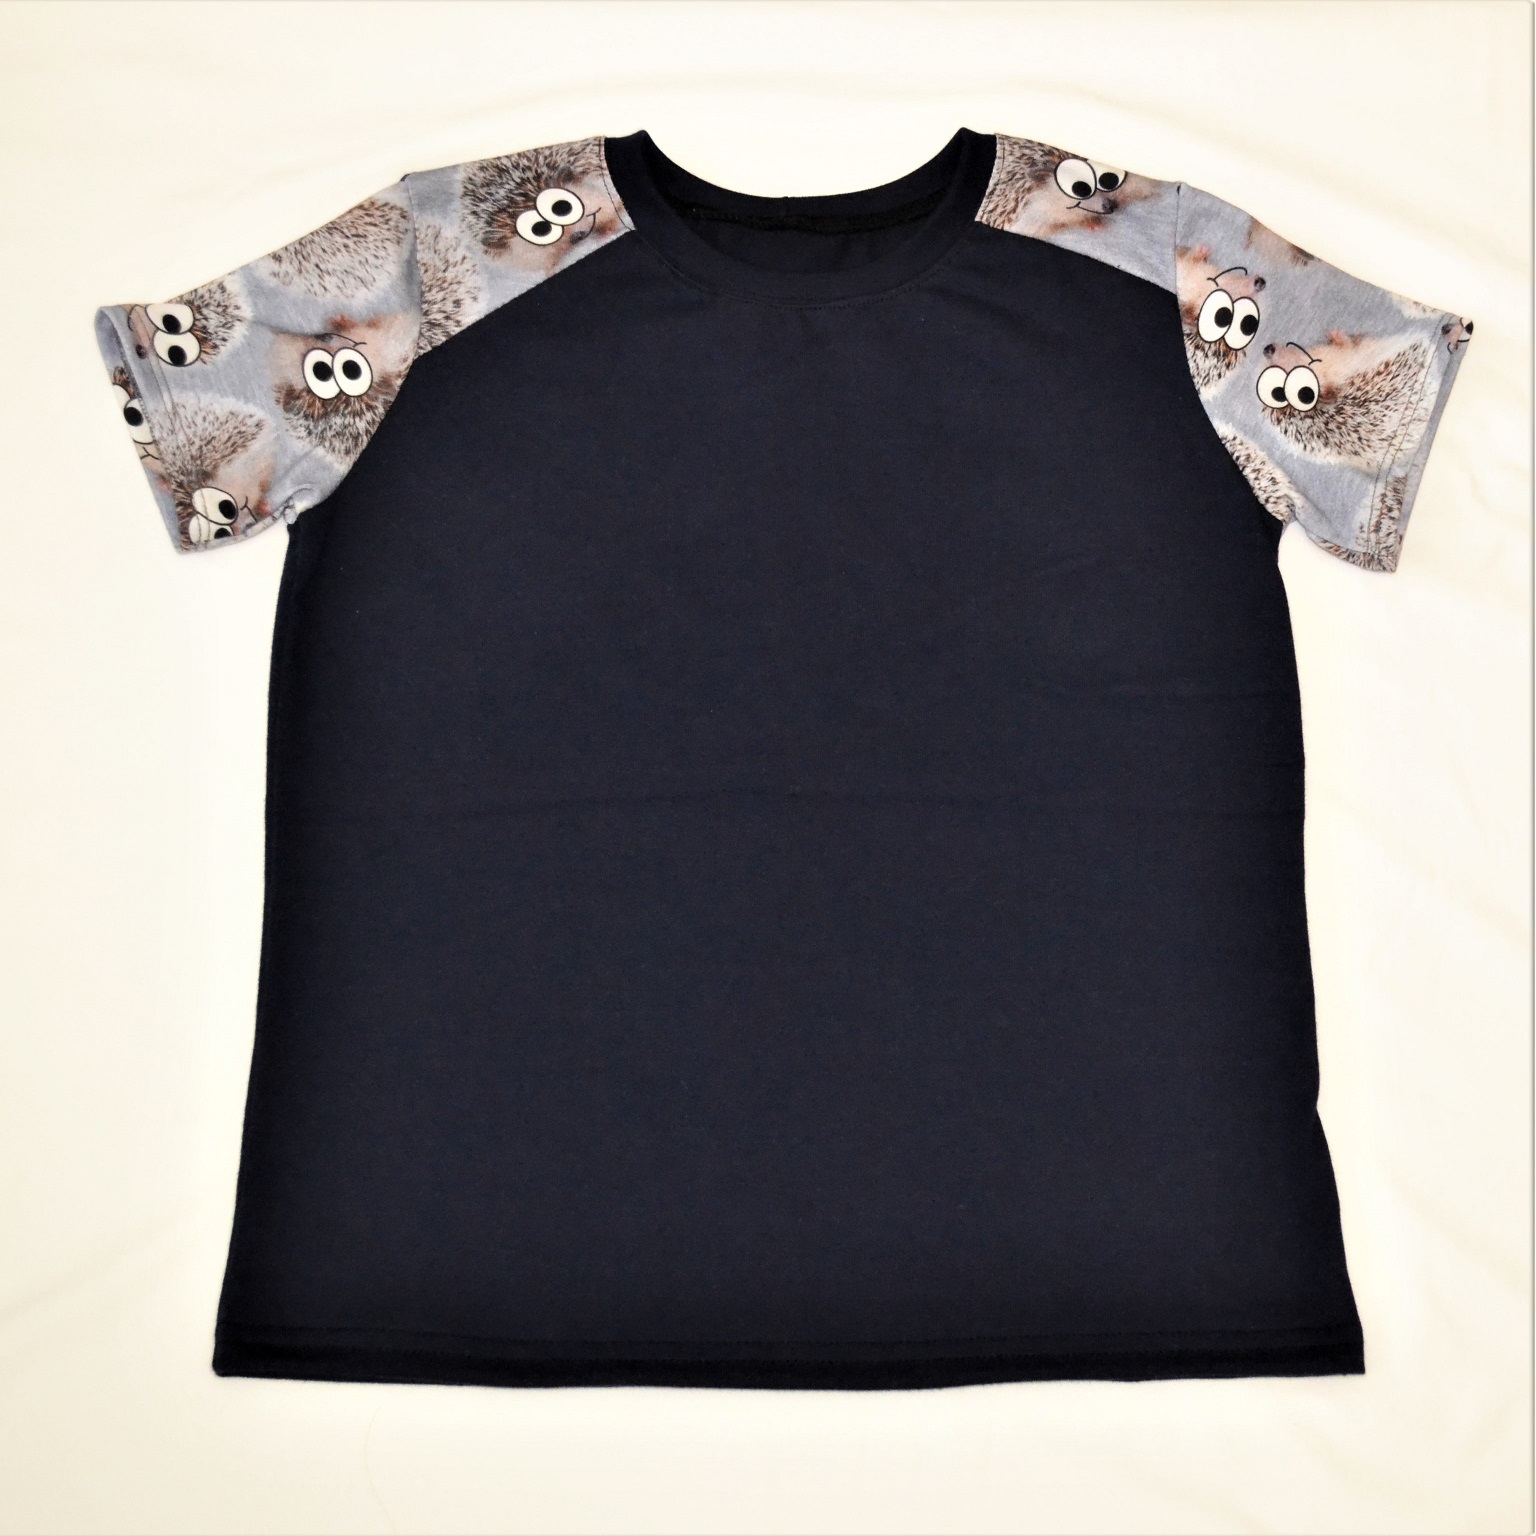 Dětské triko bavlna s ježkem, vel.122